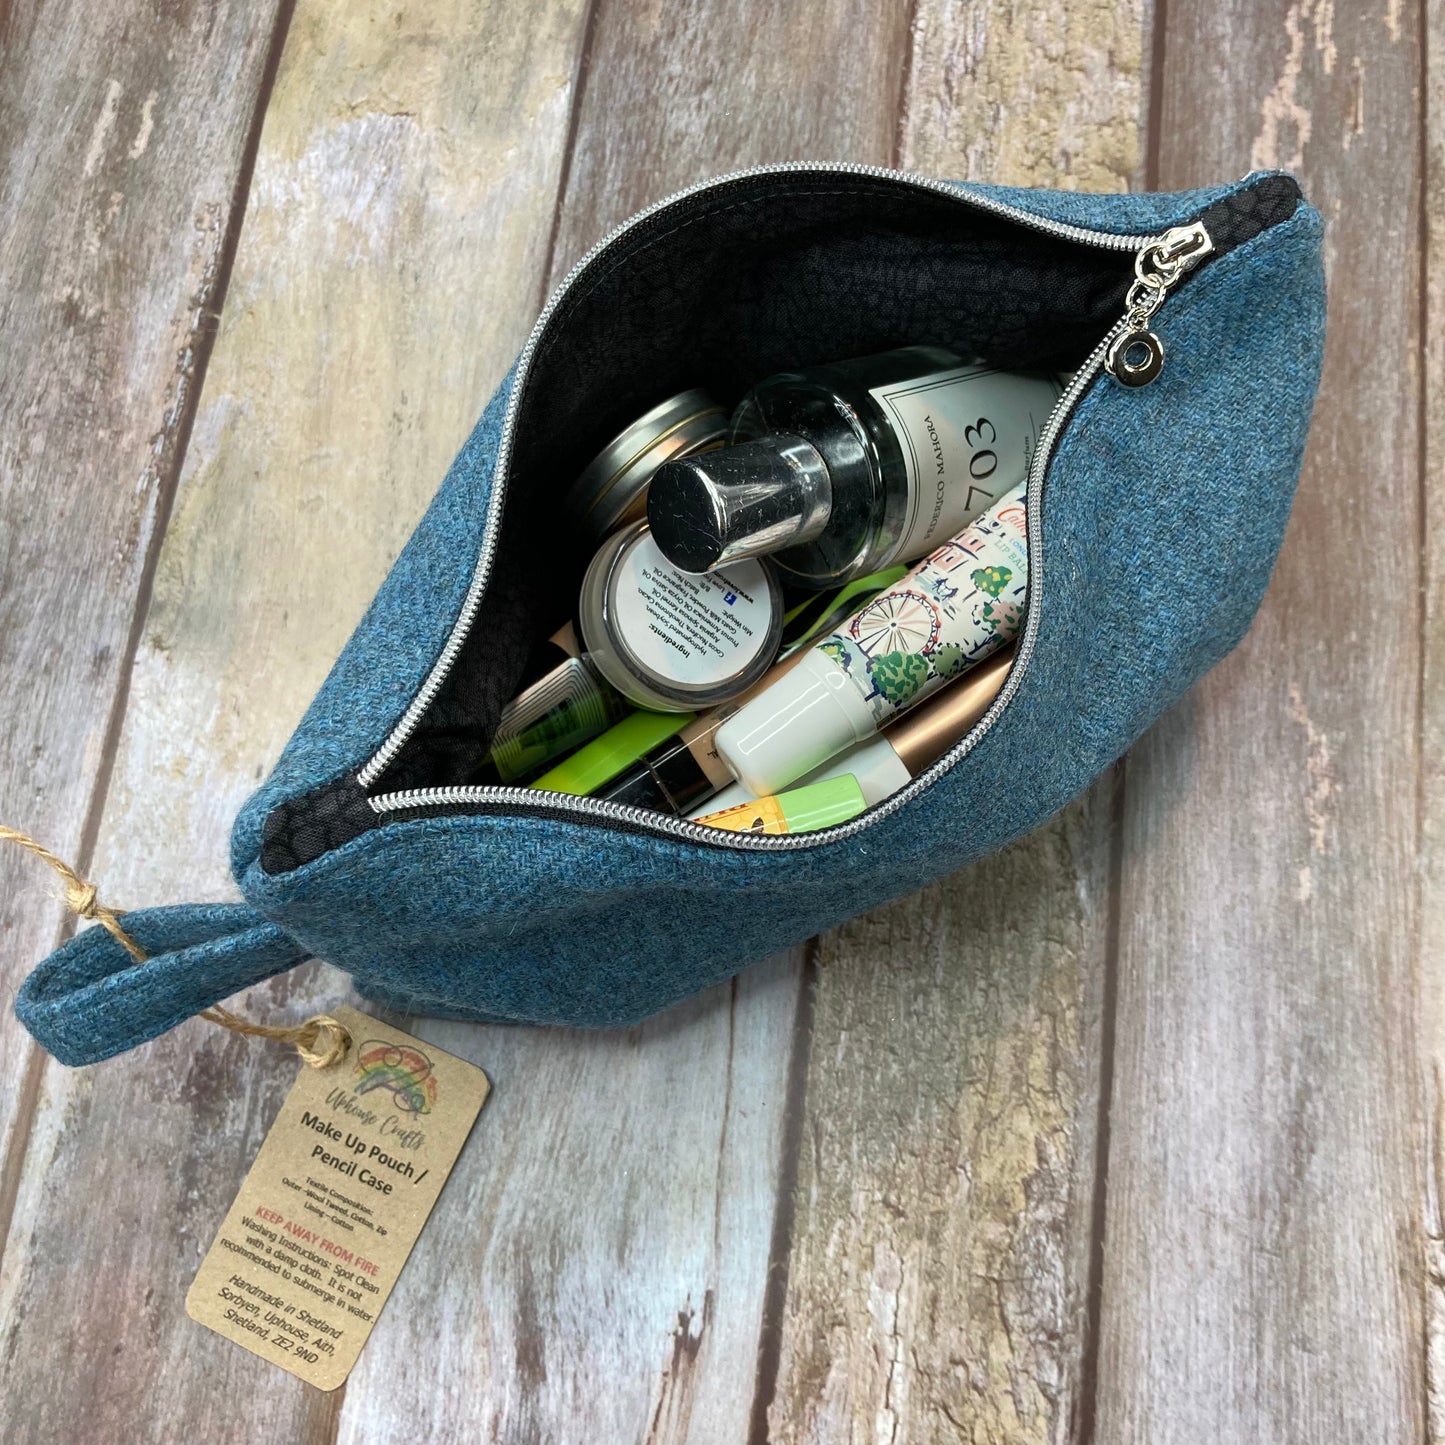 Tweed Make Up Bag / Pencil Case - Blue Tweed - Uphouse Crafts